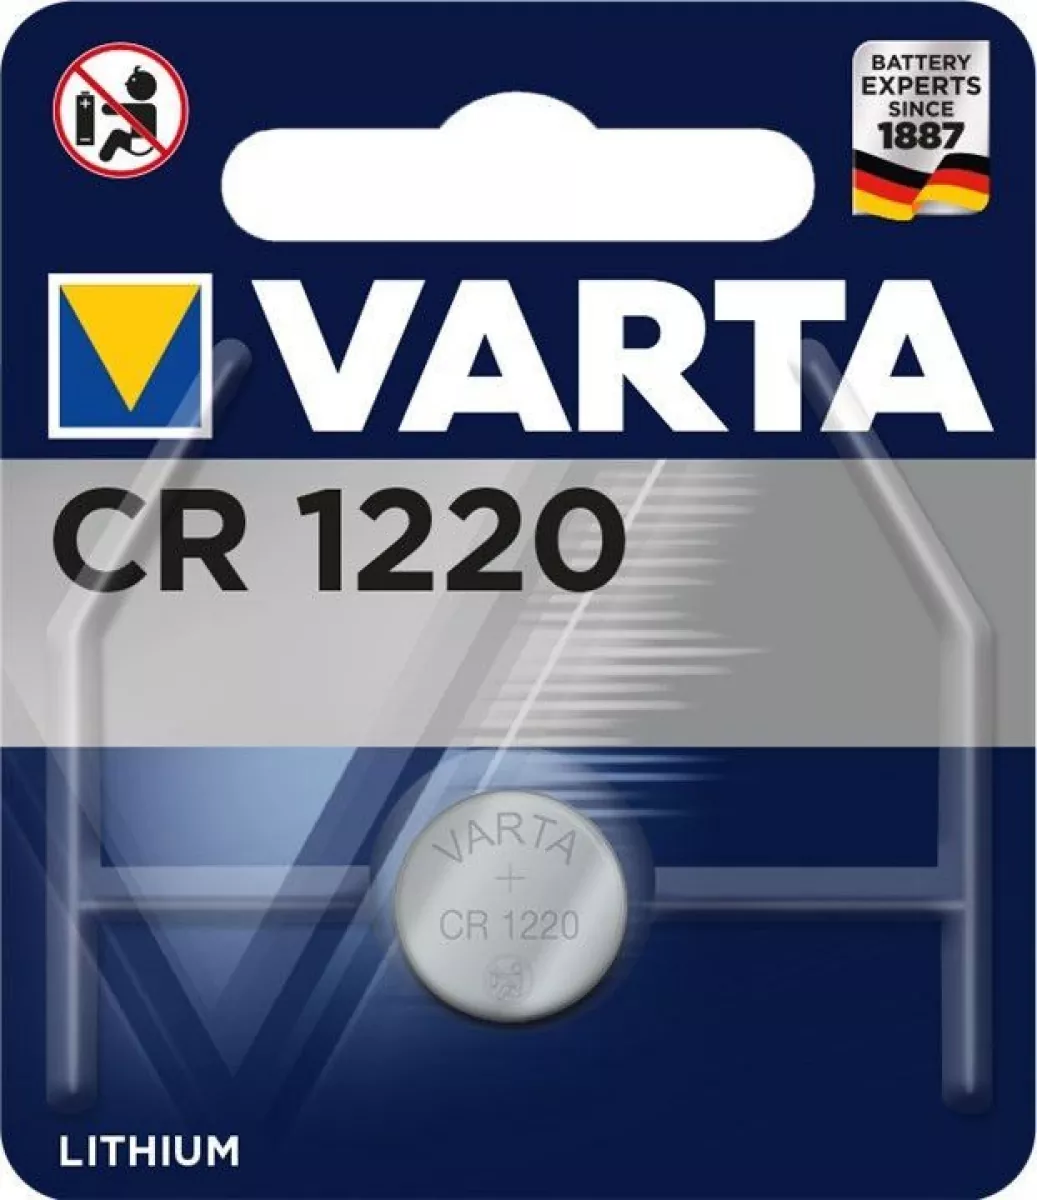 VARTA 6220 Varta Lithium Knopfzelle CR1220 3V 35mAh 6220 H306